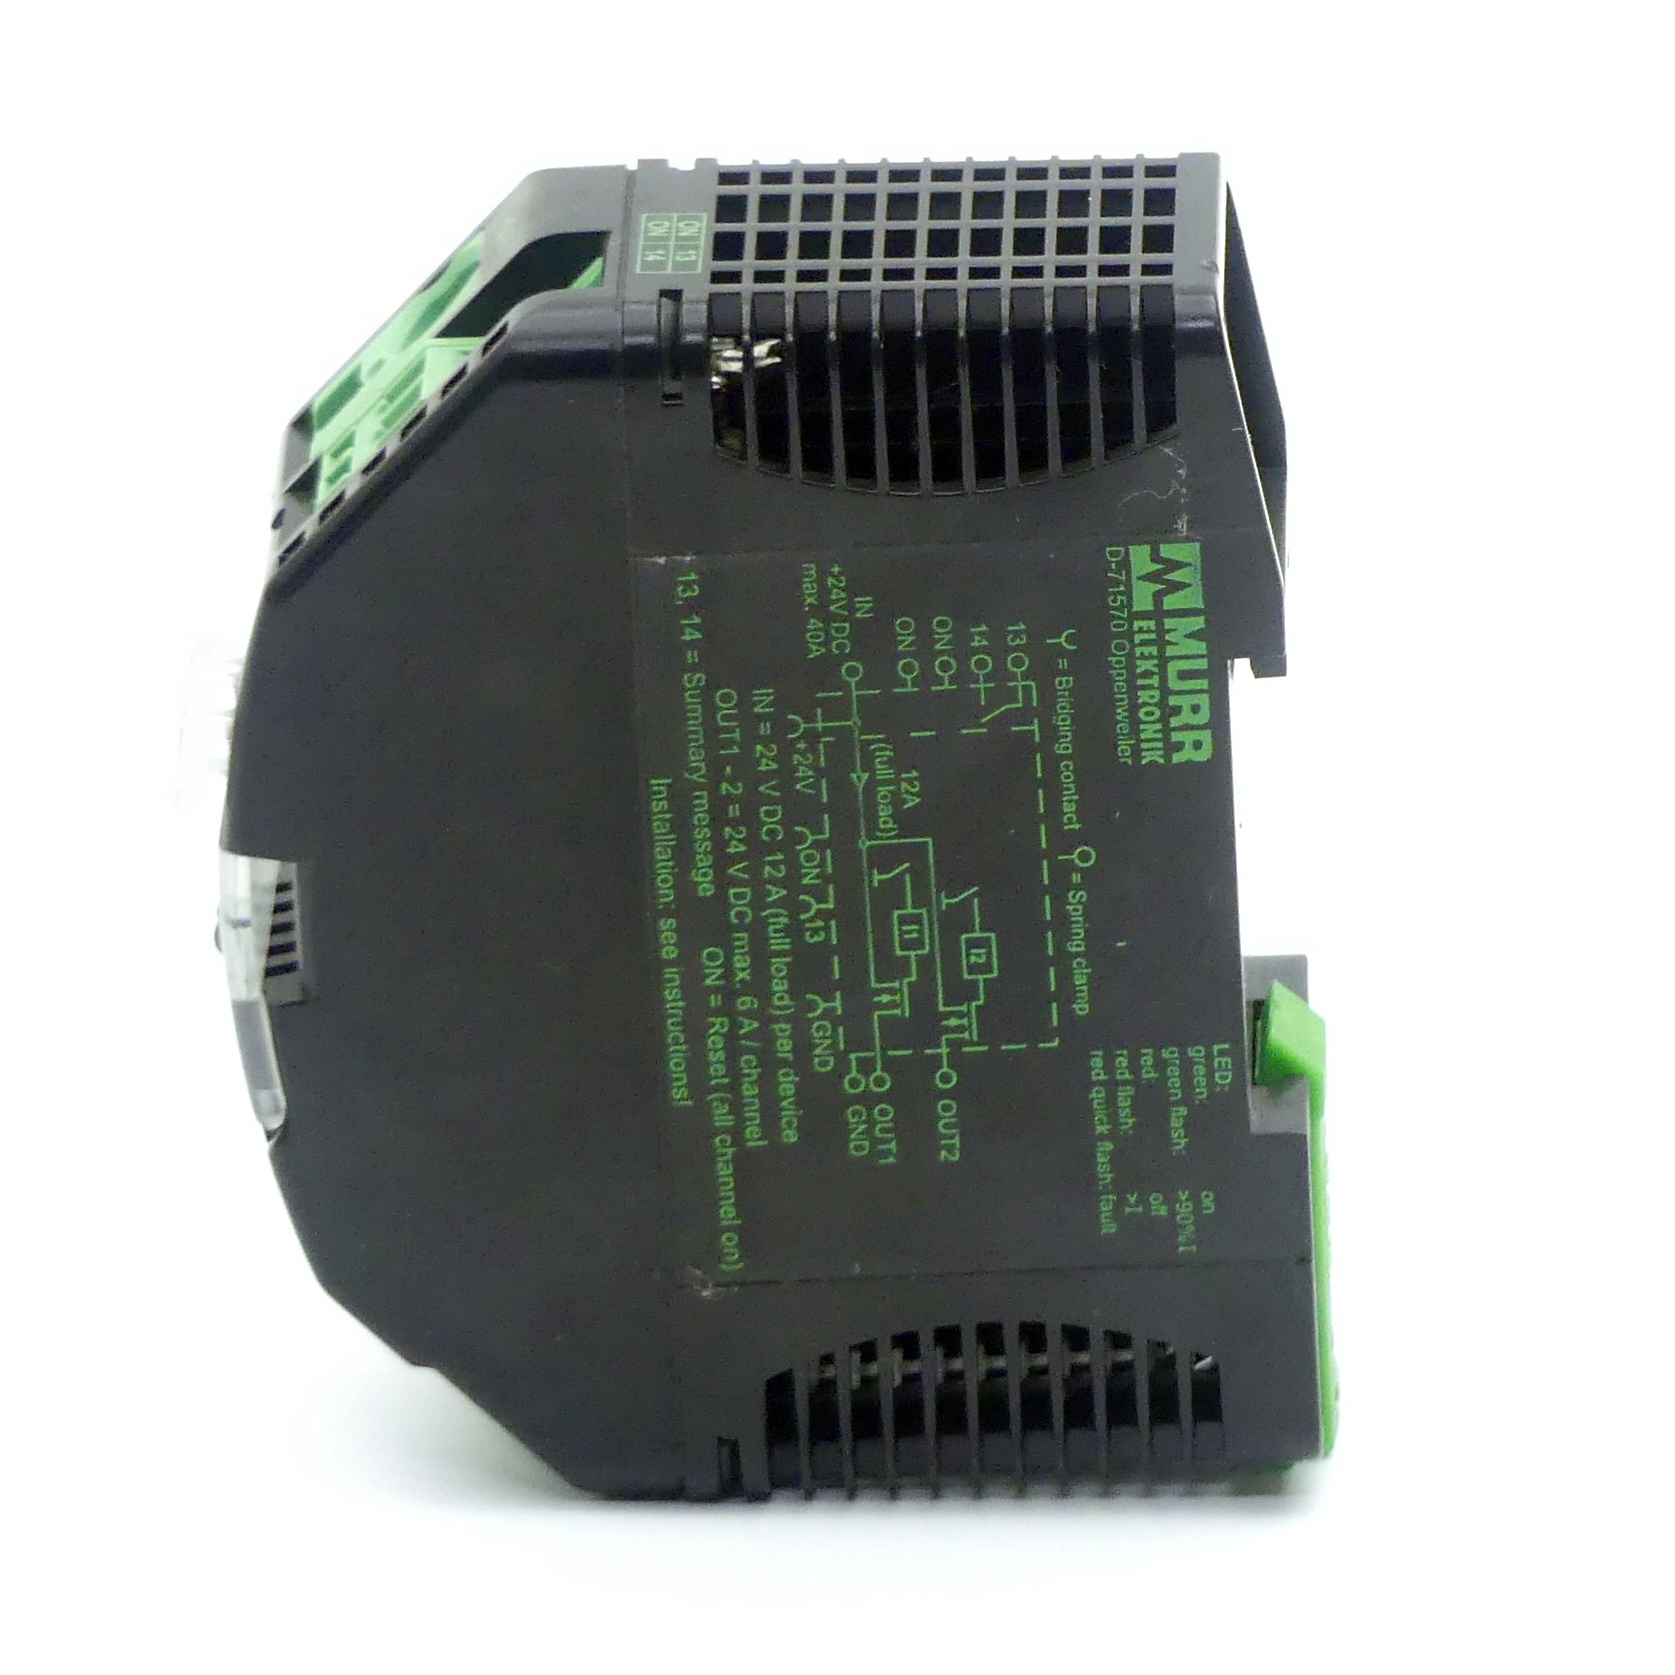 Load circuit monitoring 9000-41042-0100600 